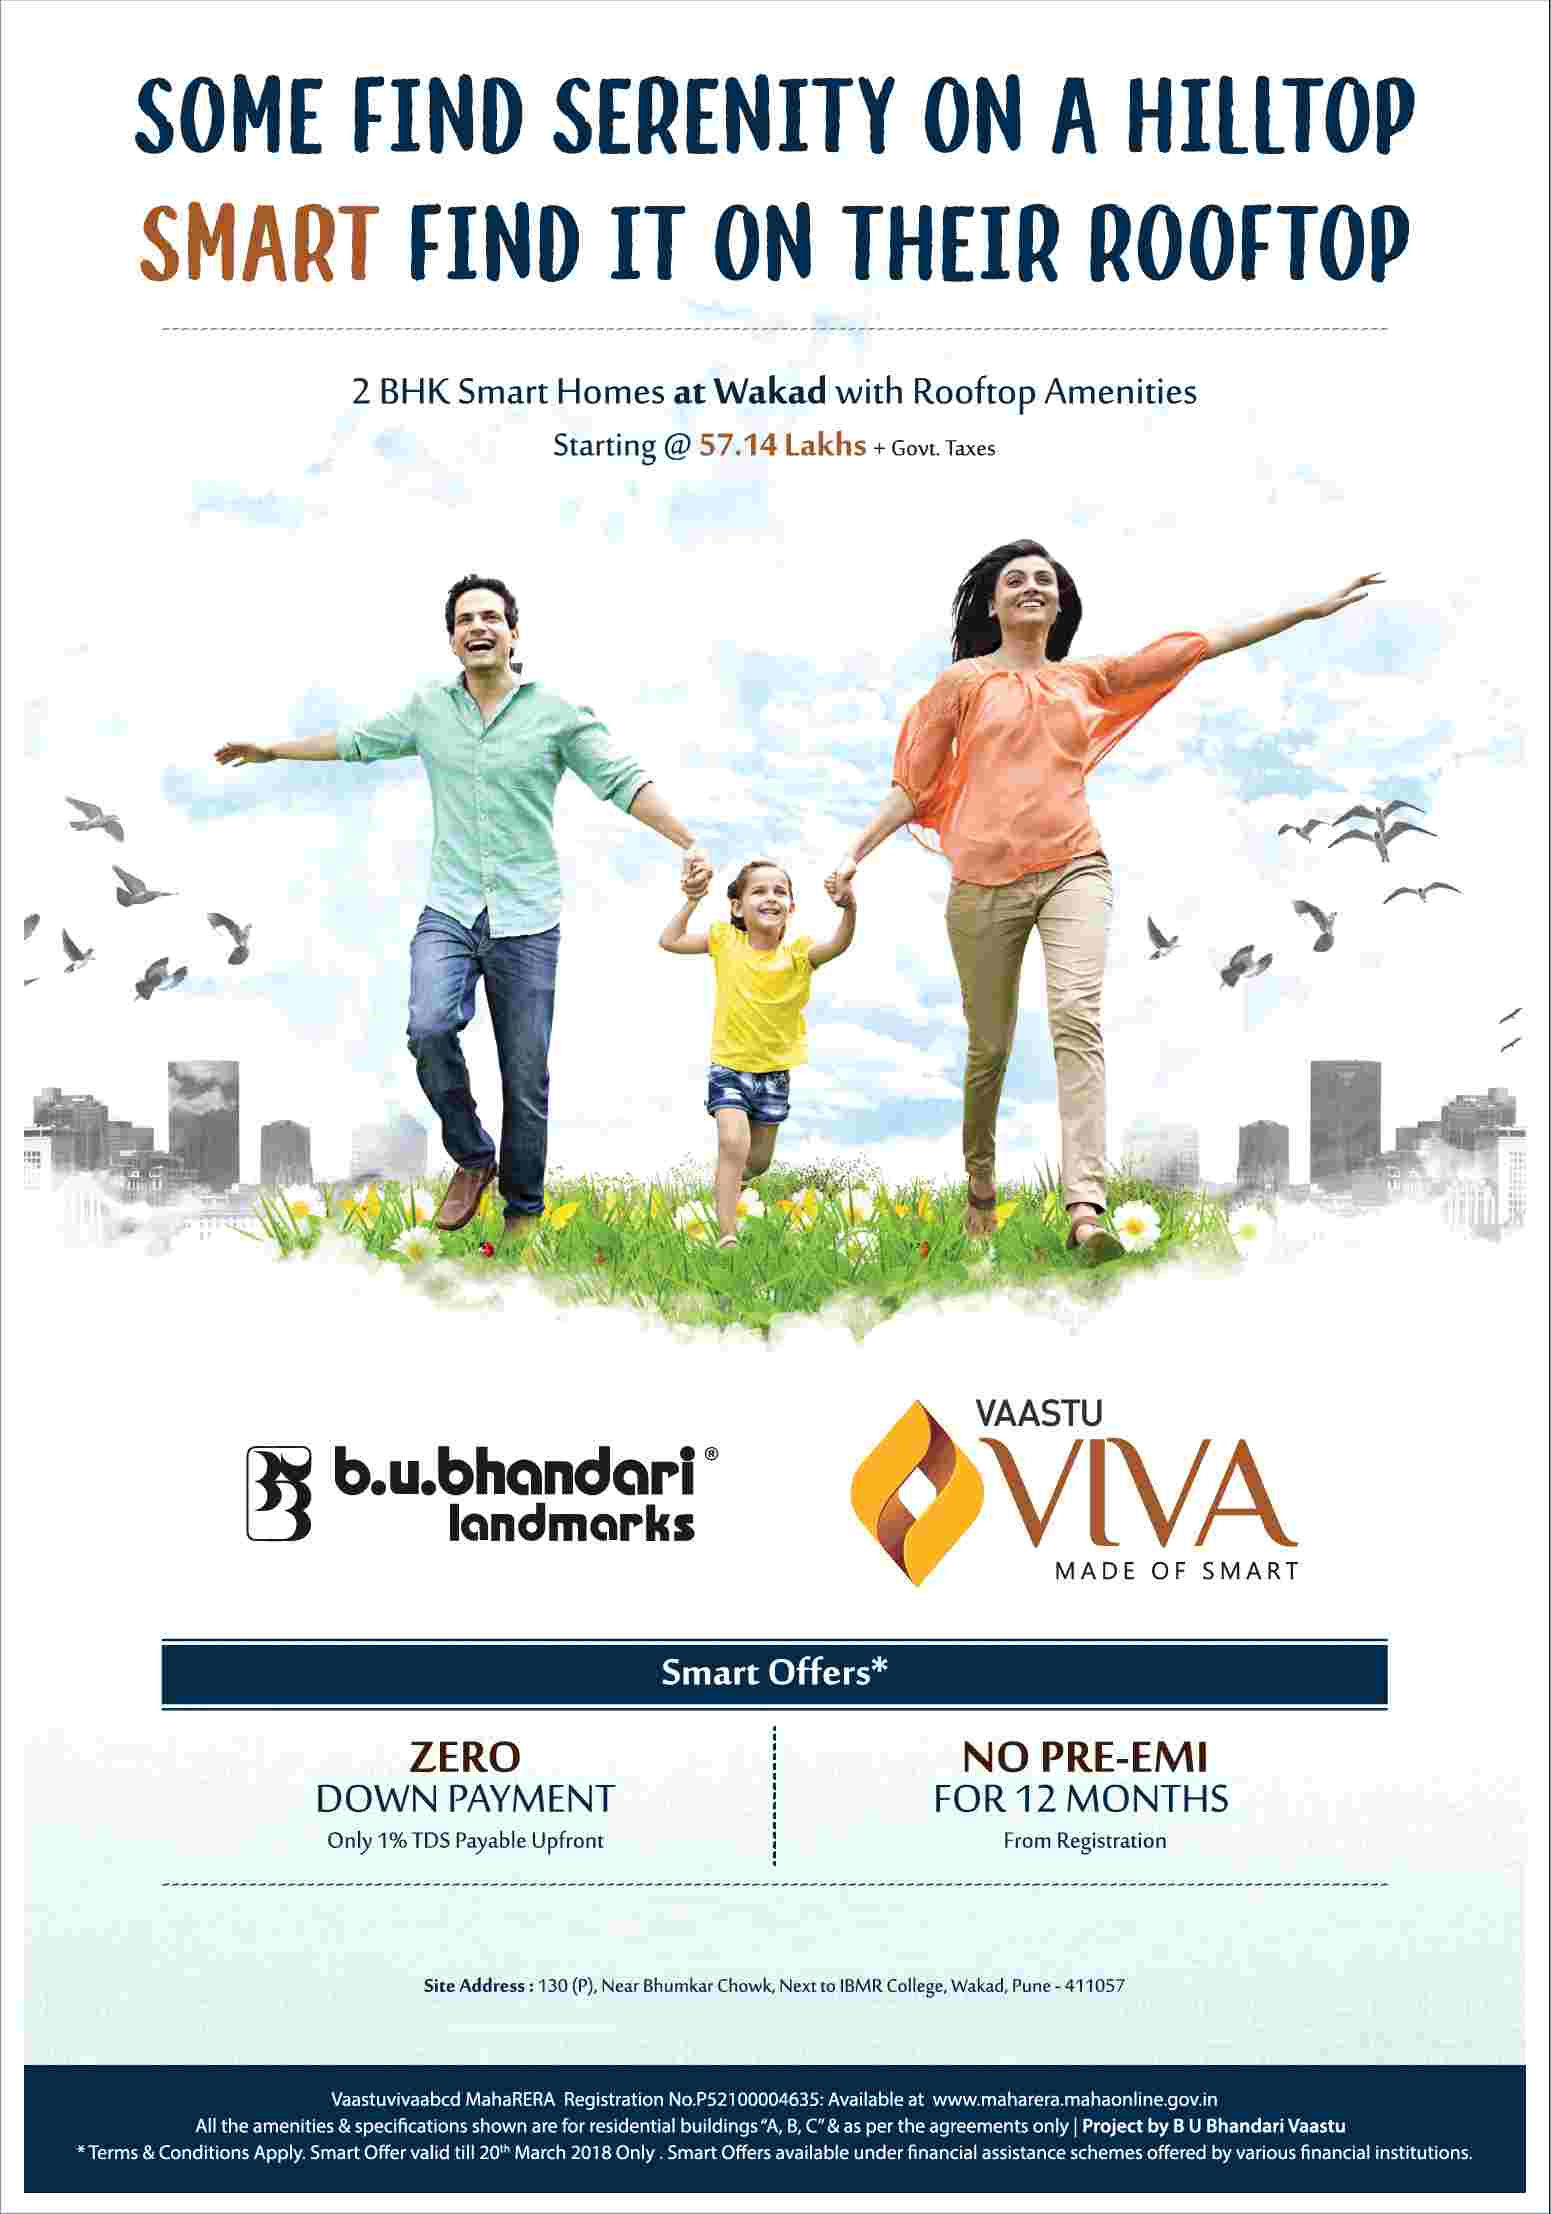 Pay no pre-EMI for 12 months from registration at Bhandari Vaastu Viva in Pune